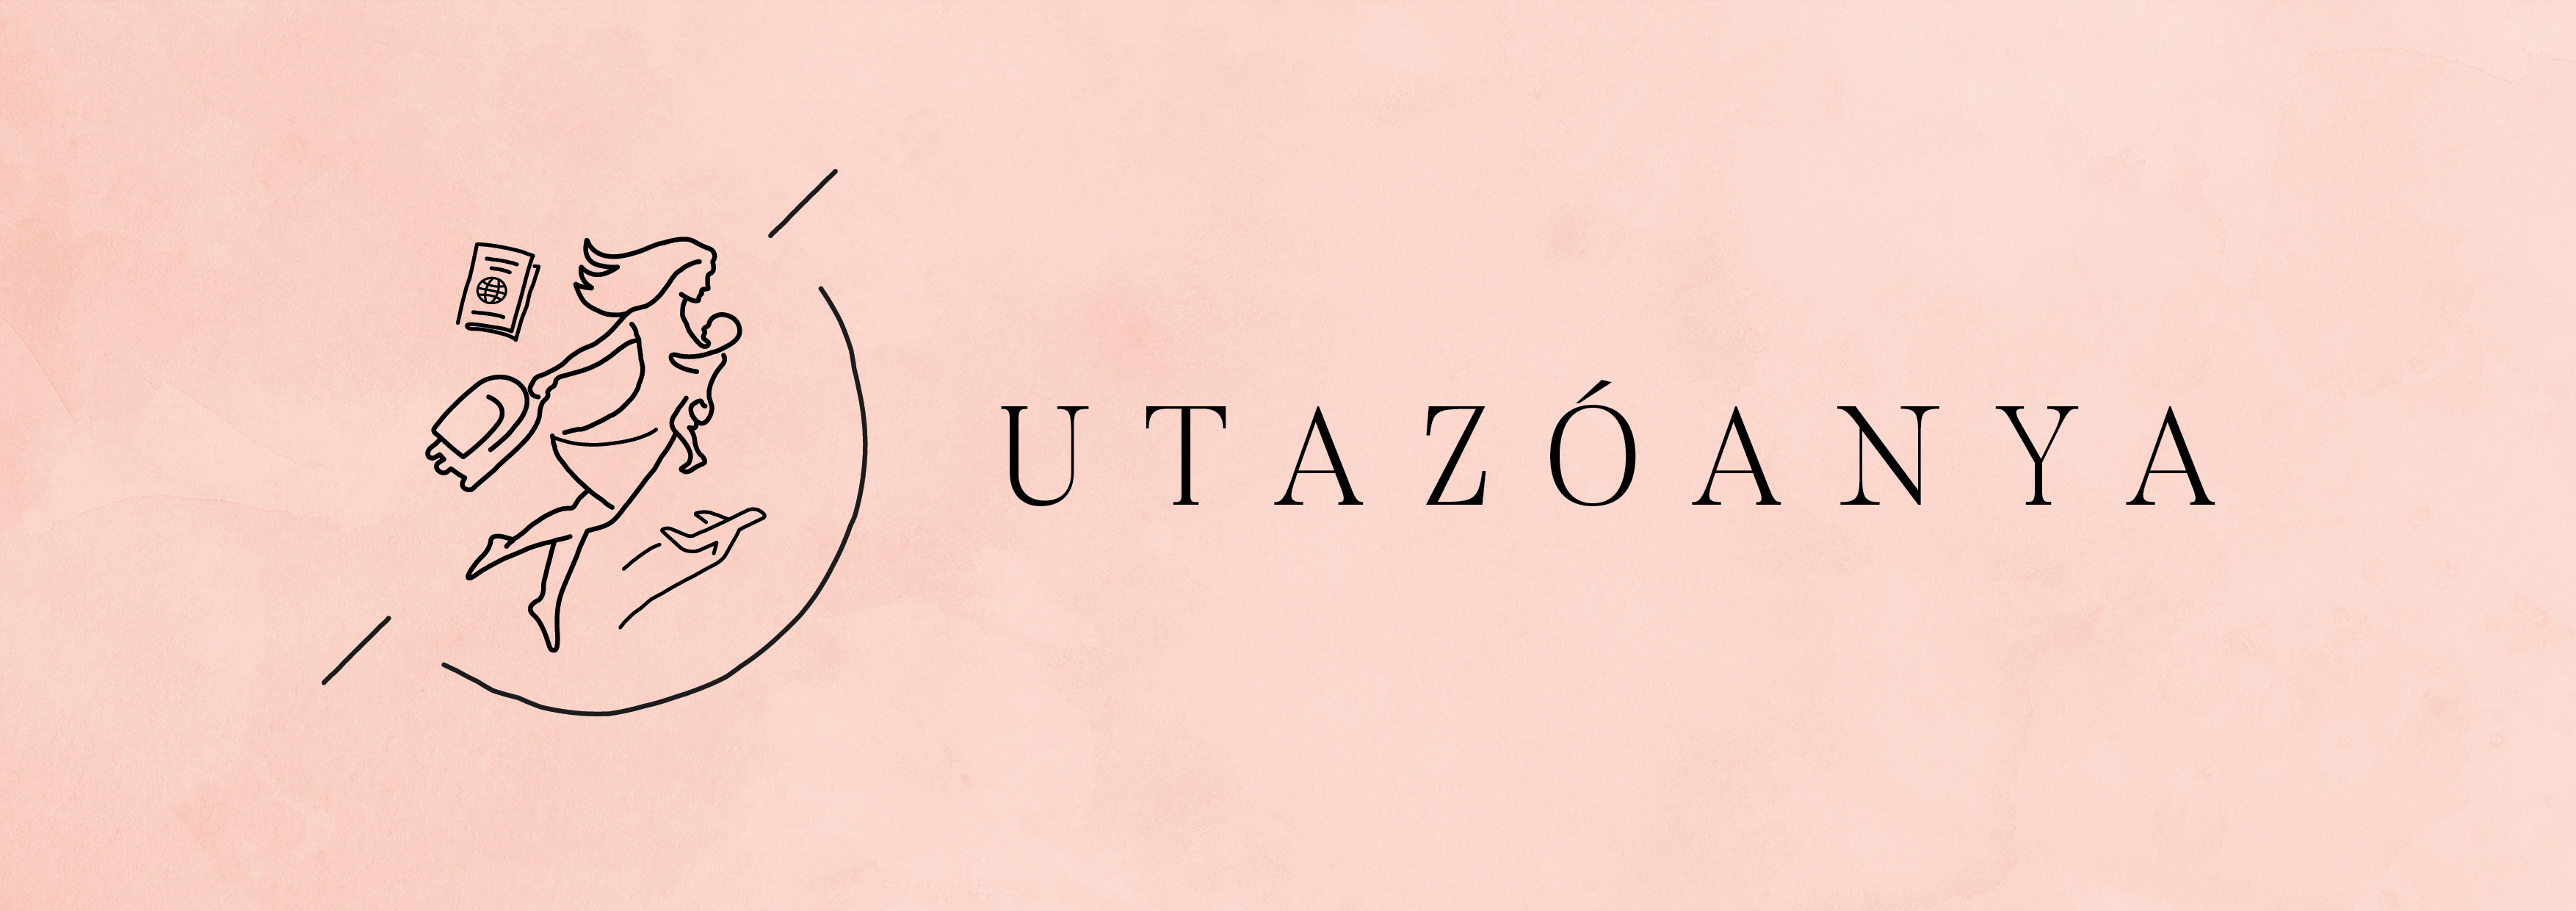 Utazóanya_Logo_Landscape_Pink_Textured_RGB